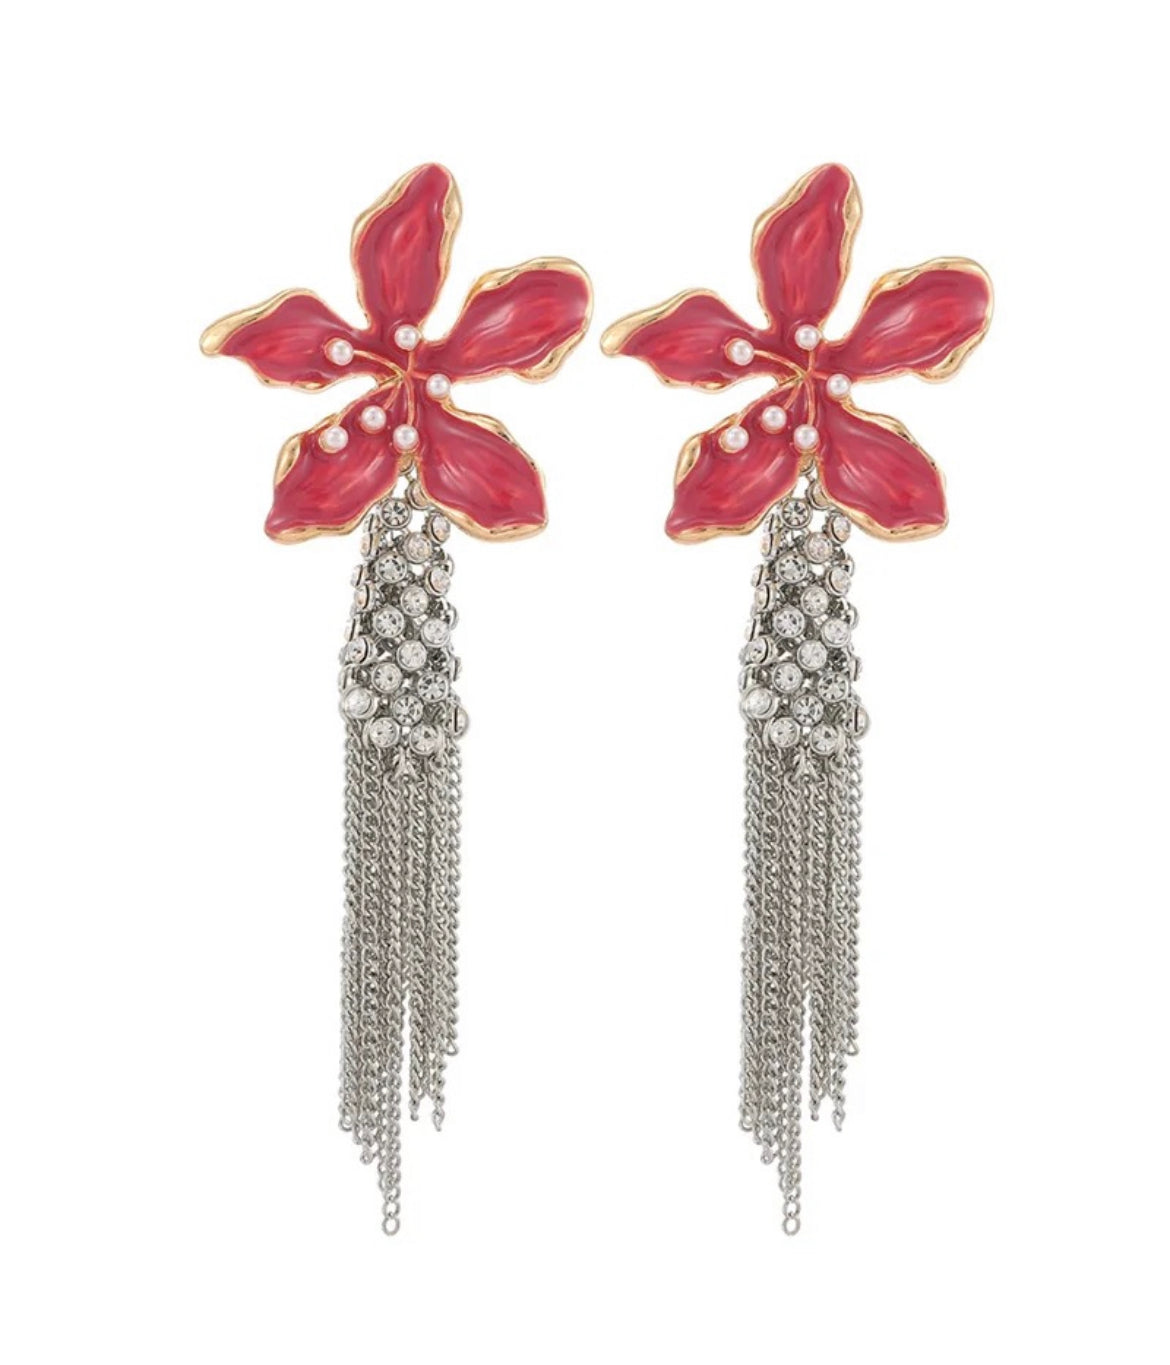 Flower tassel earrings